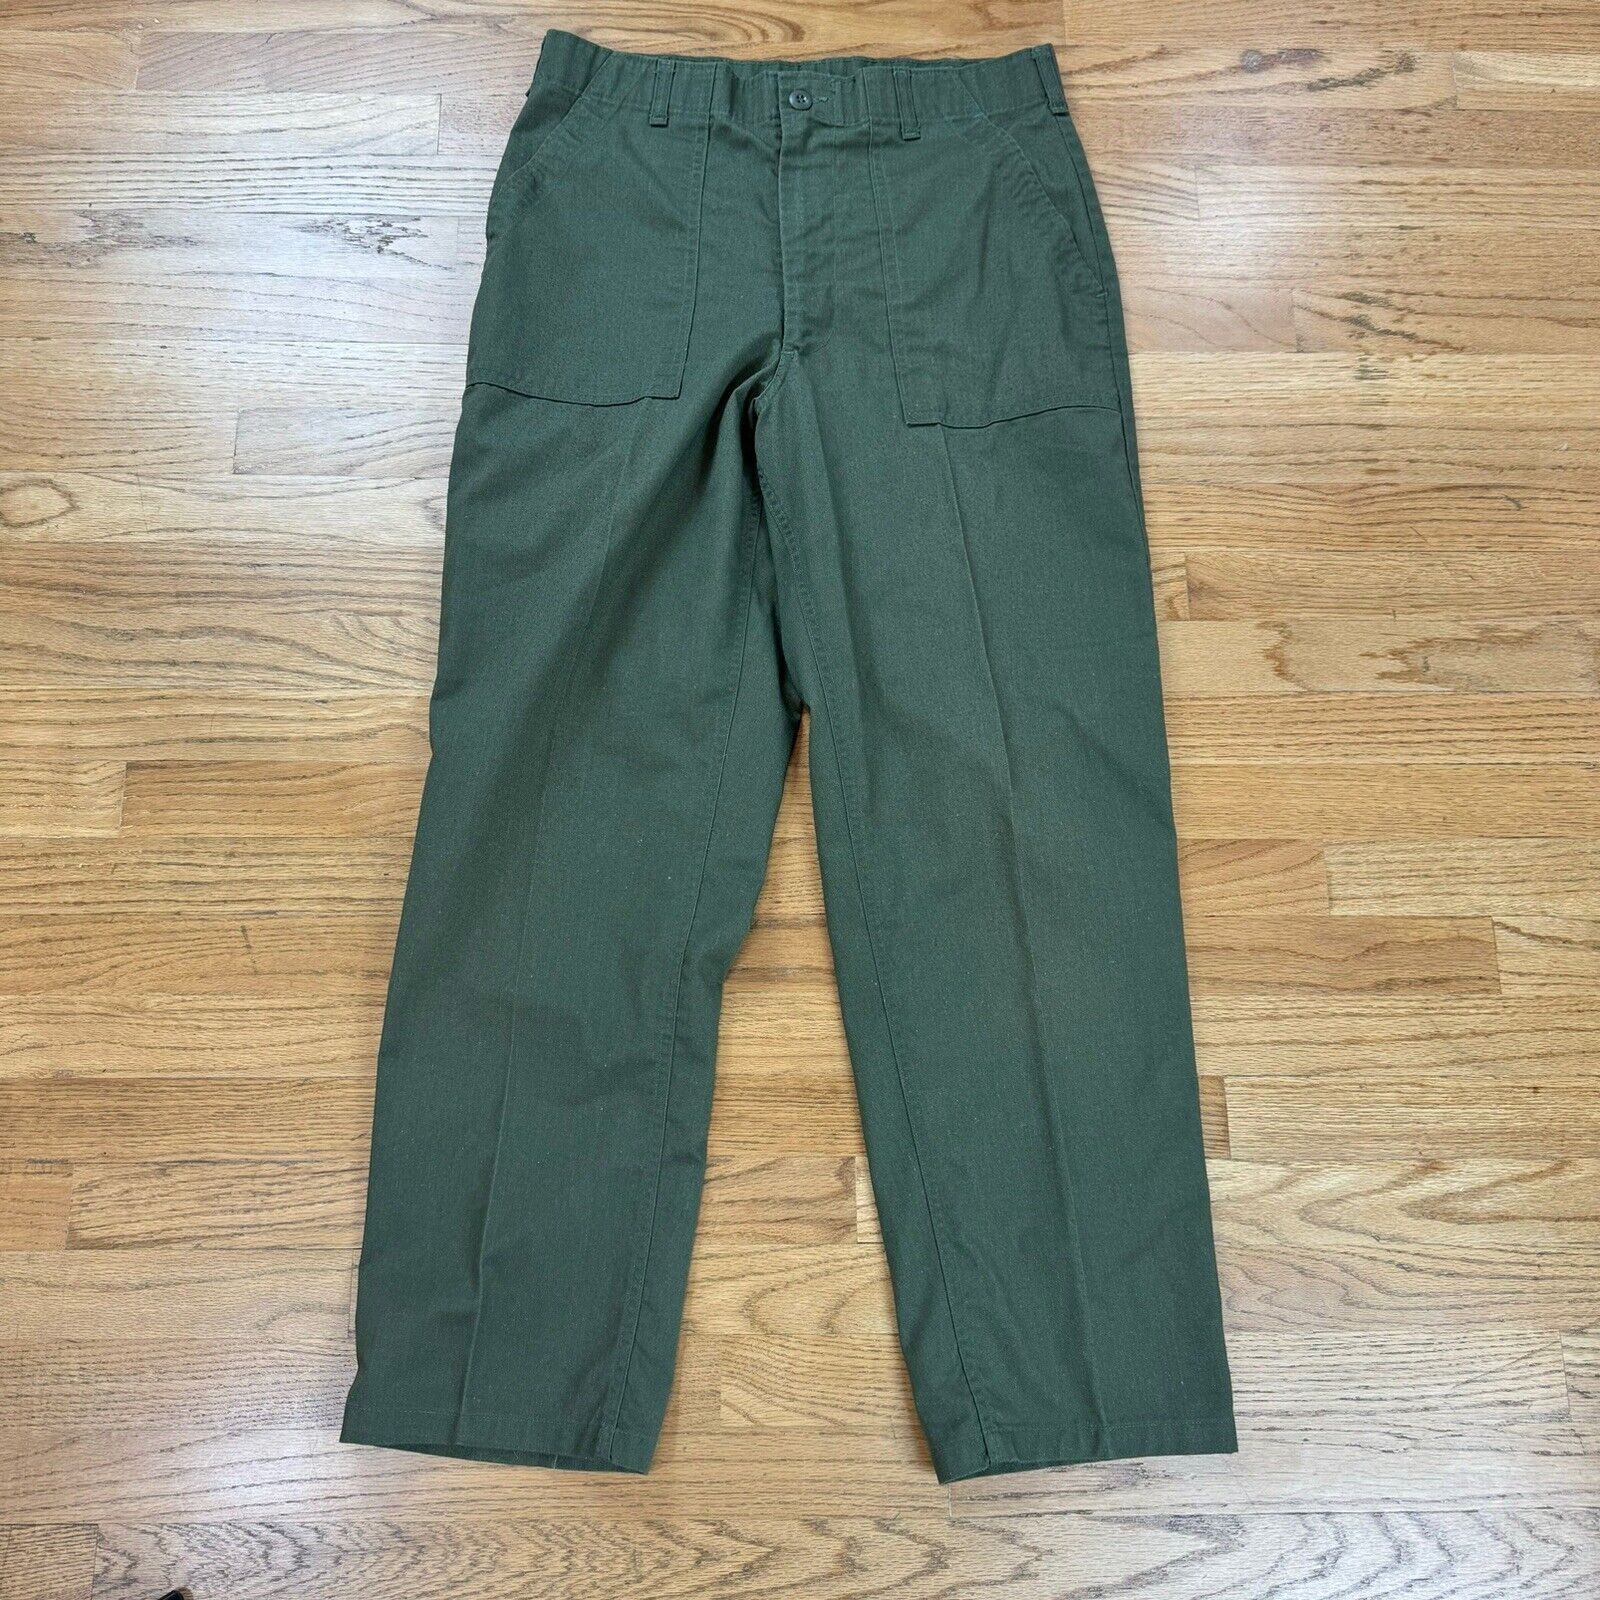 Vtg Military Trousers Utility Durable Press OG-507 Pants Olive Green 36x30 #3